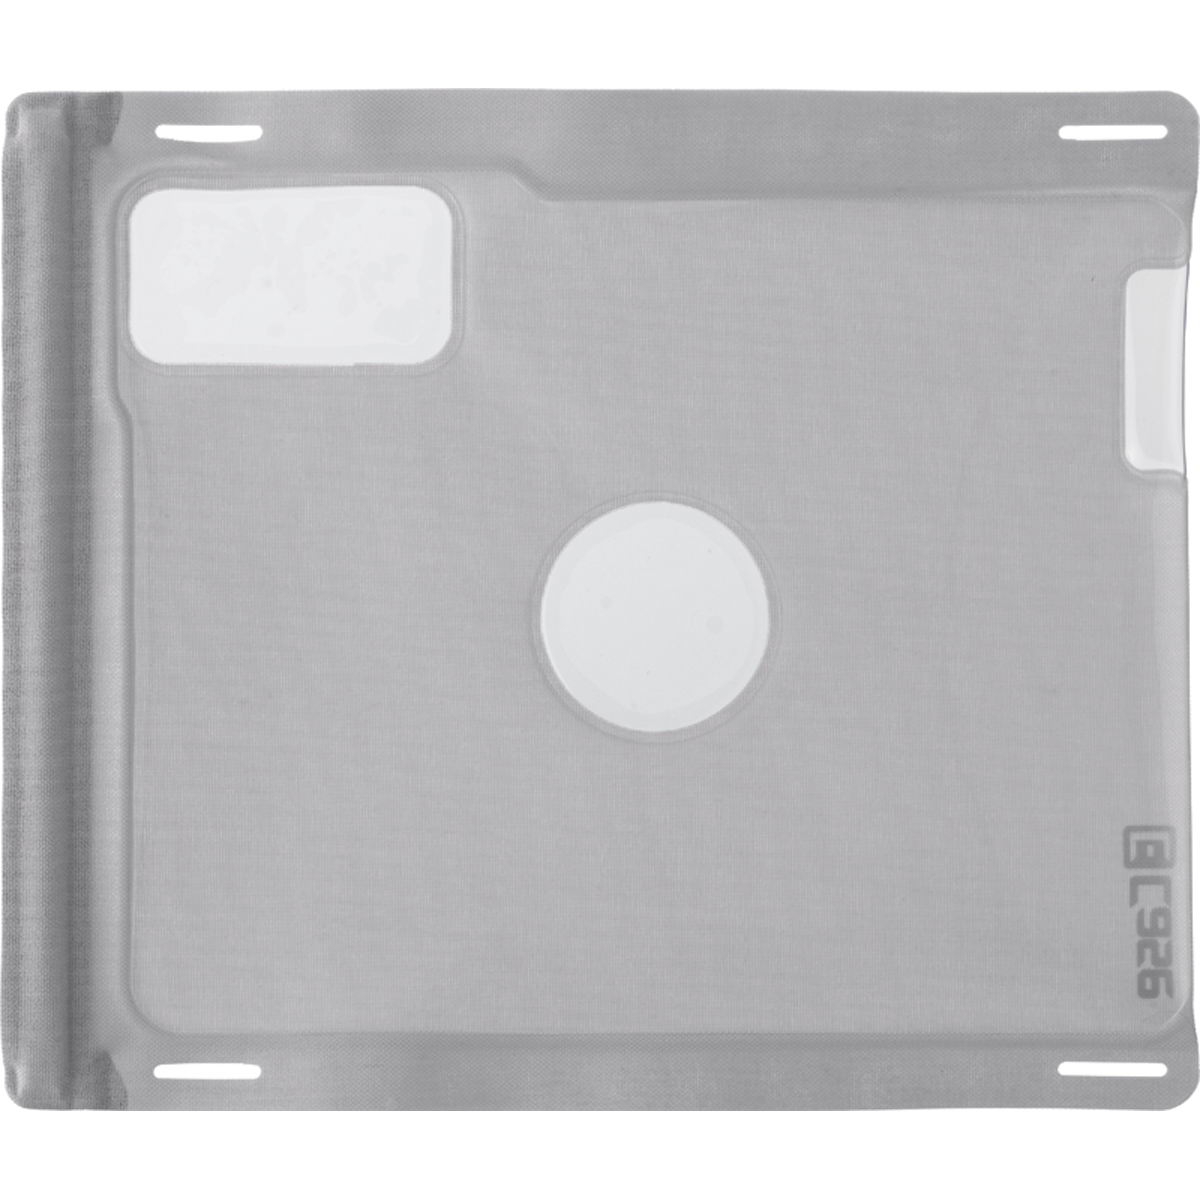 Foto E-Case™ iSeries™ iPad®, Cool Gray (Modell 2013)